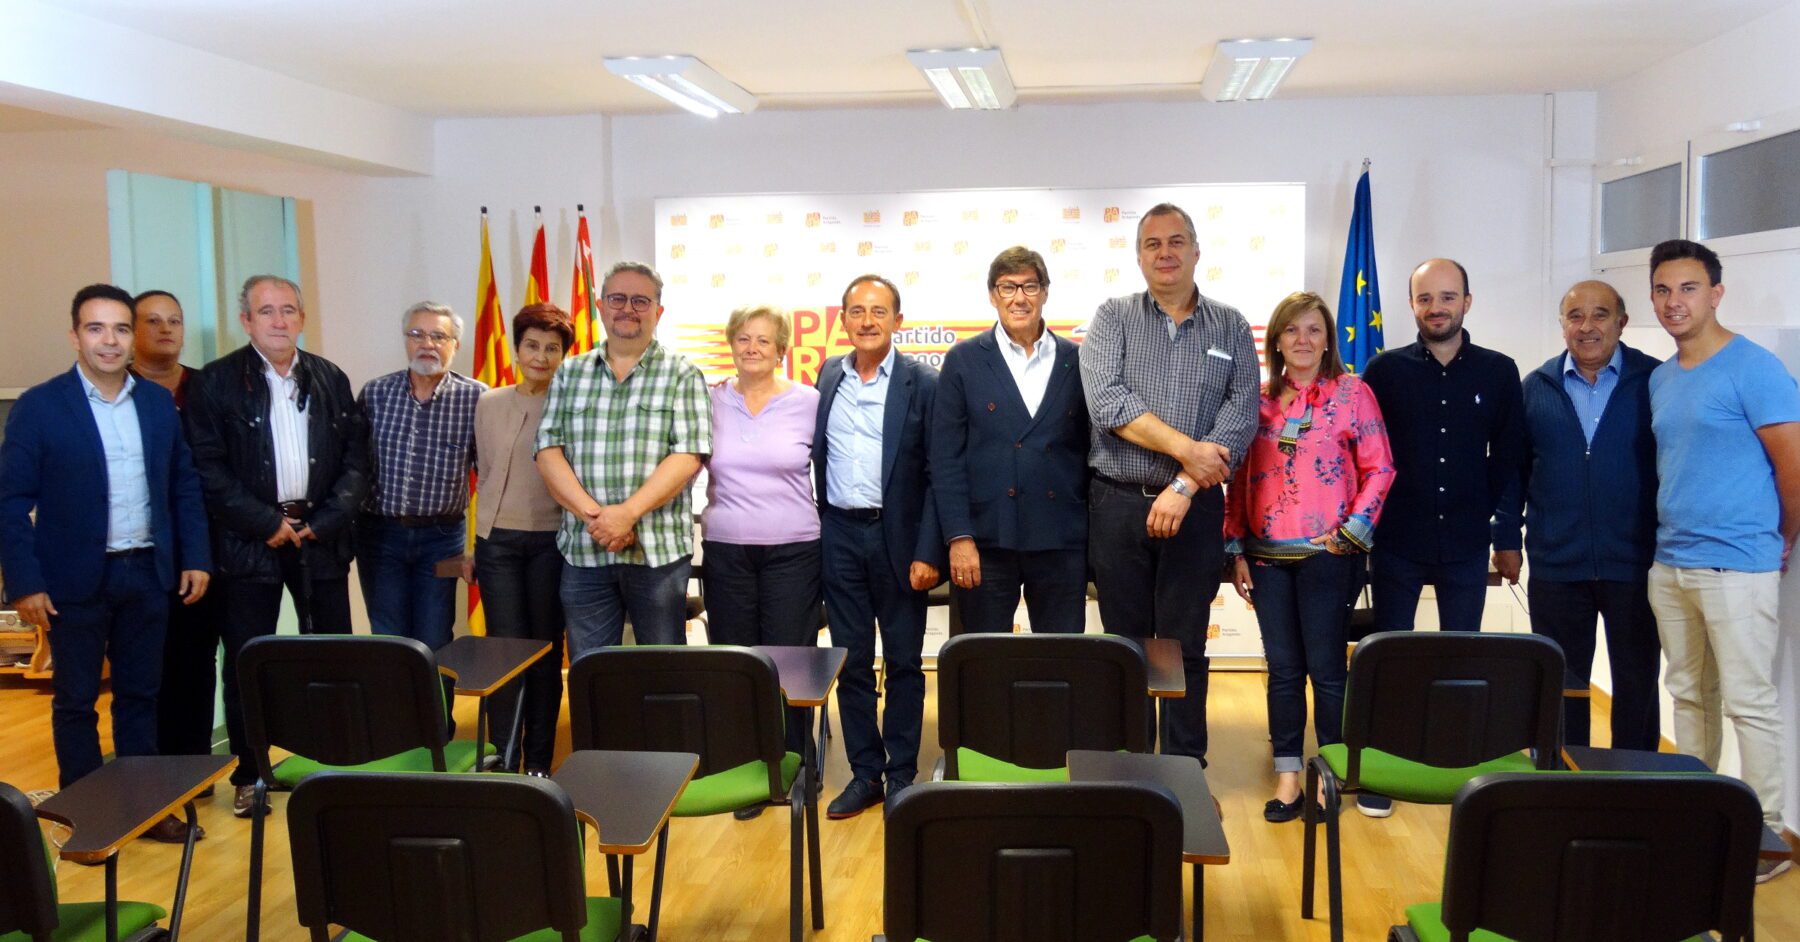 Reunión PAR-Huesca con Arturo Aliaga y representantes del Comité intercomarcal